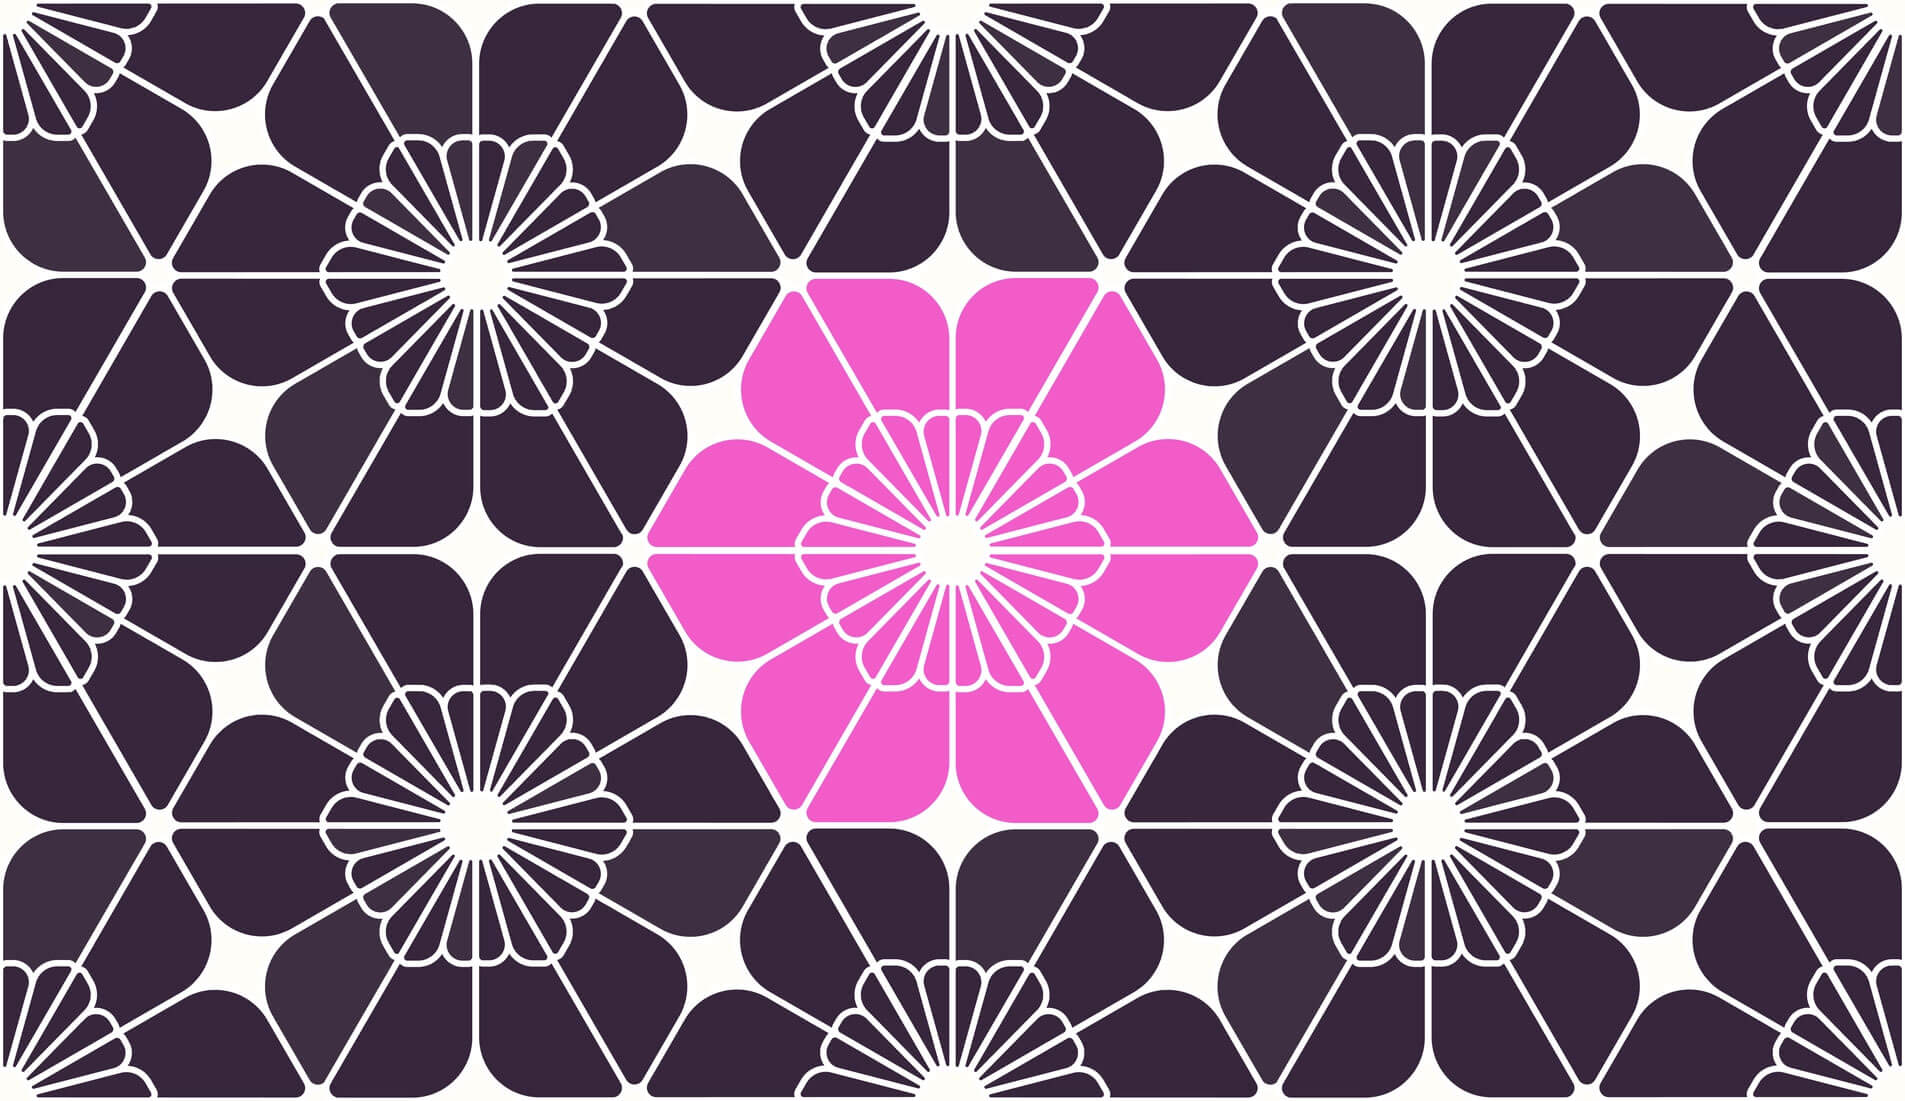 Hexagonal Flower Pattern Figma illustrator2